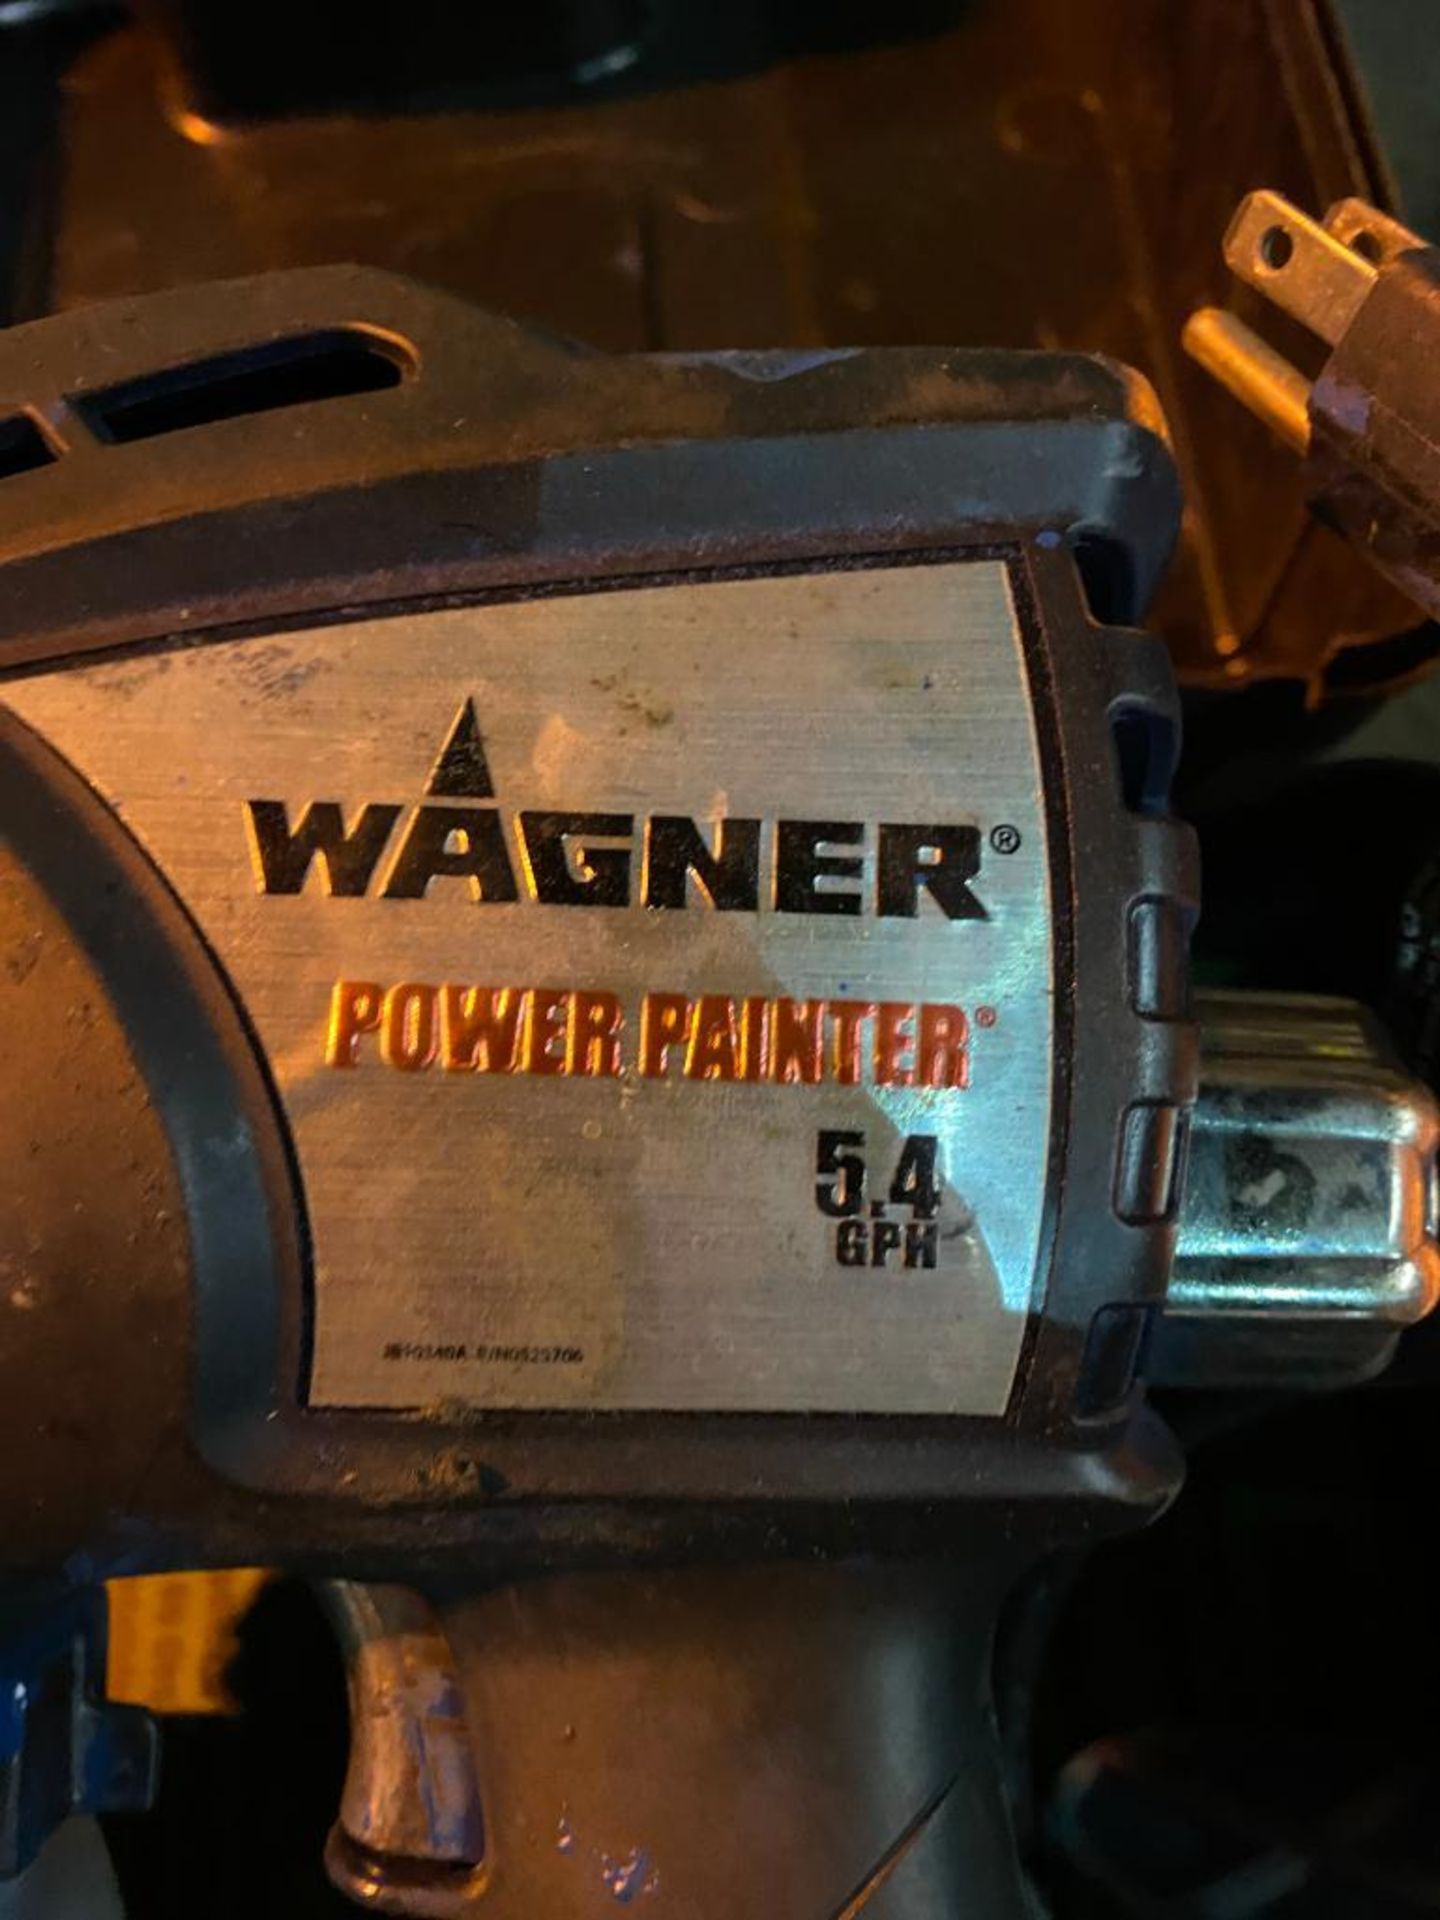 Wagner Power Painter Spray Gun, 5.4 GPM - Image 2 of 2